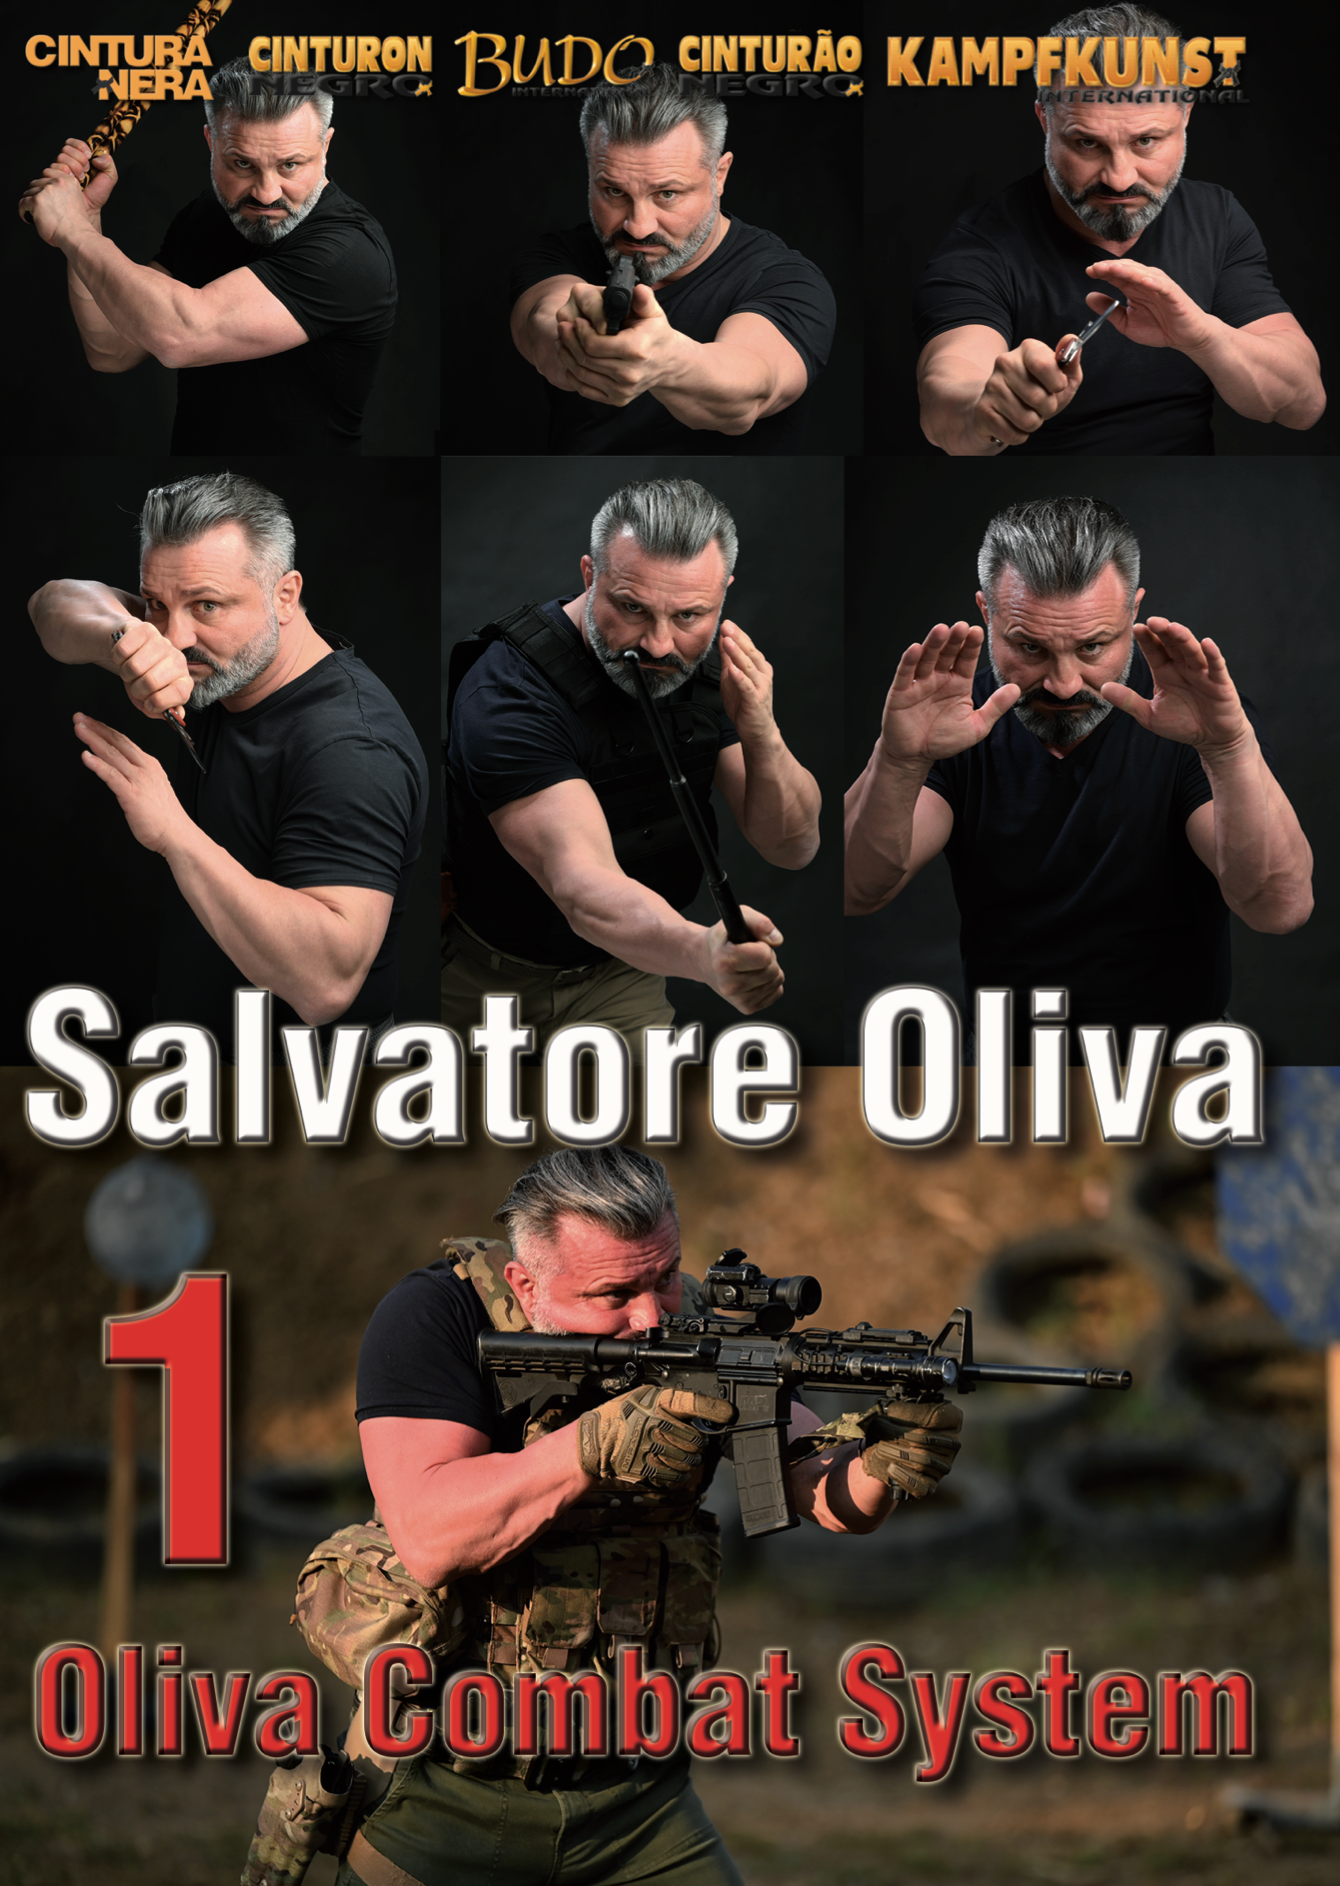 Oliva Combat System Series 1 DVD by Salvatore Oliva